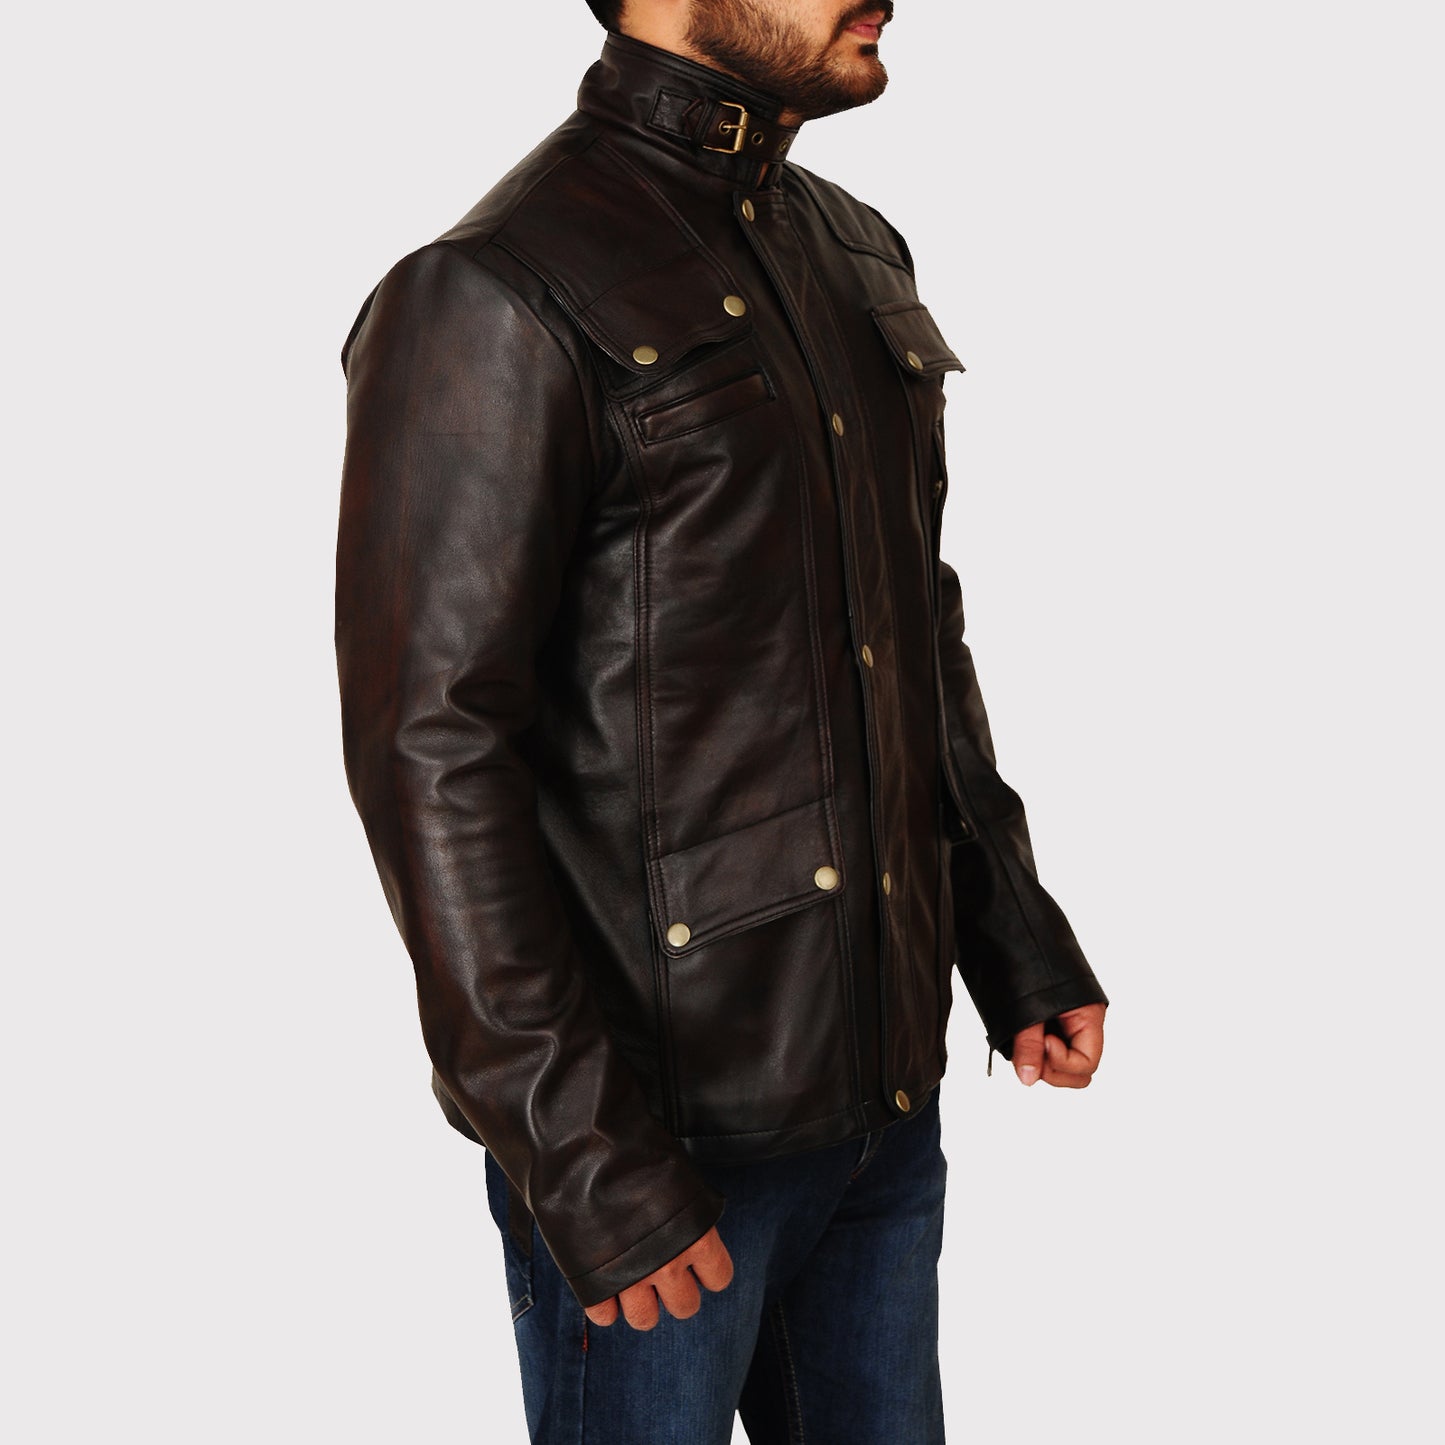 Men's Classic Dark Brown Leather Jacket